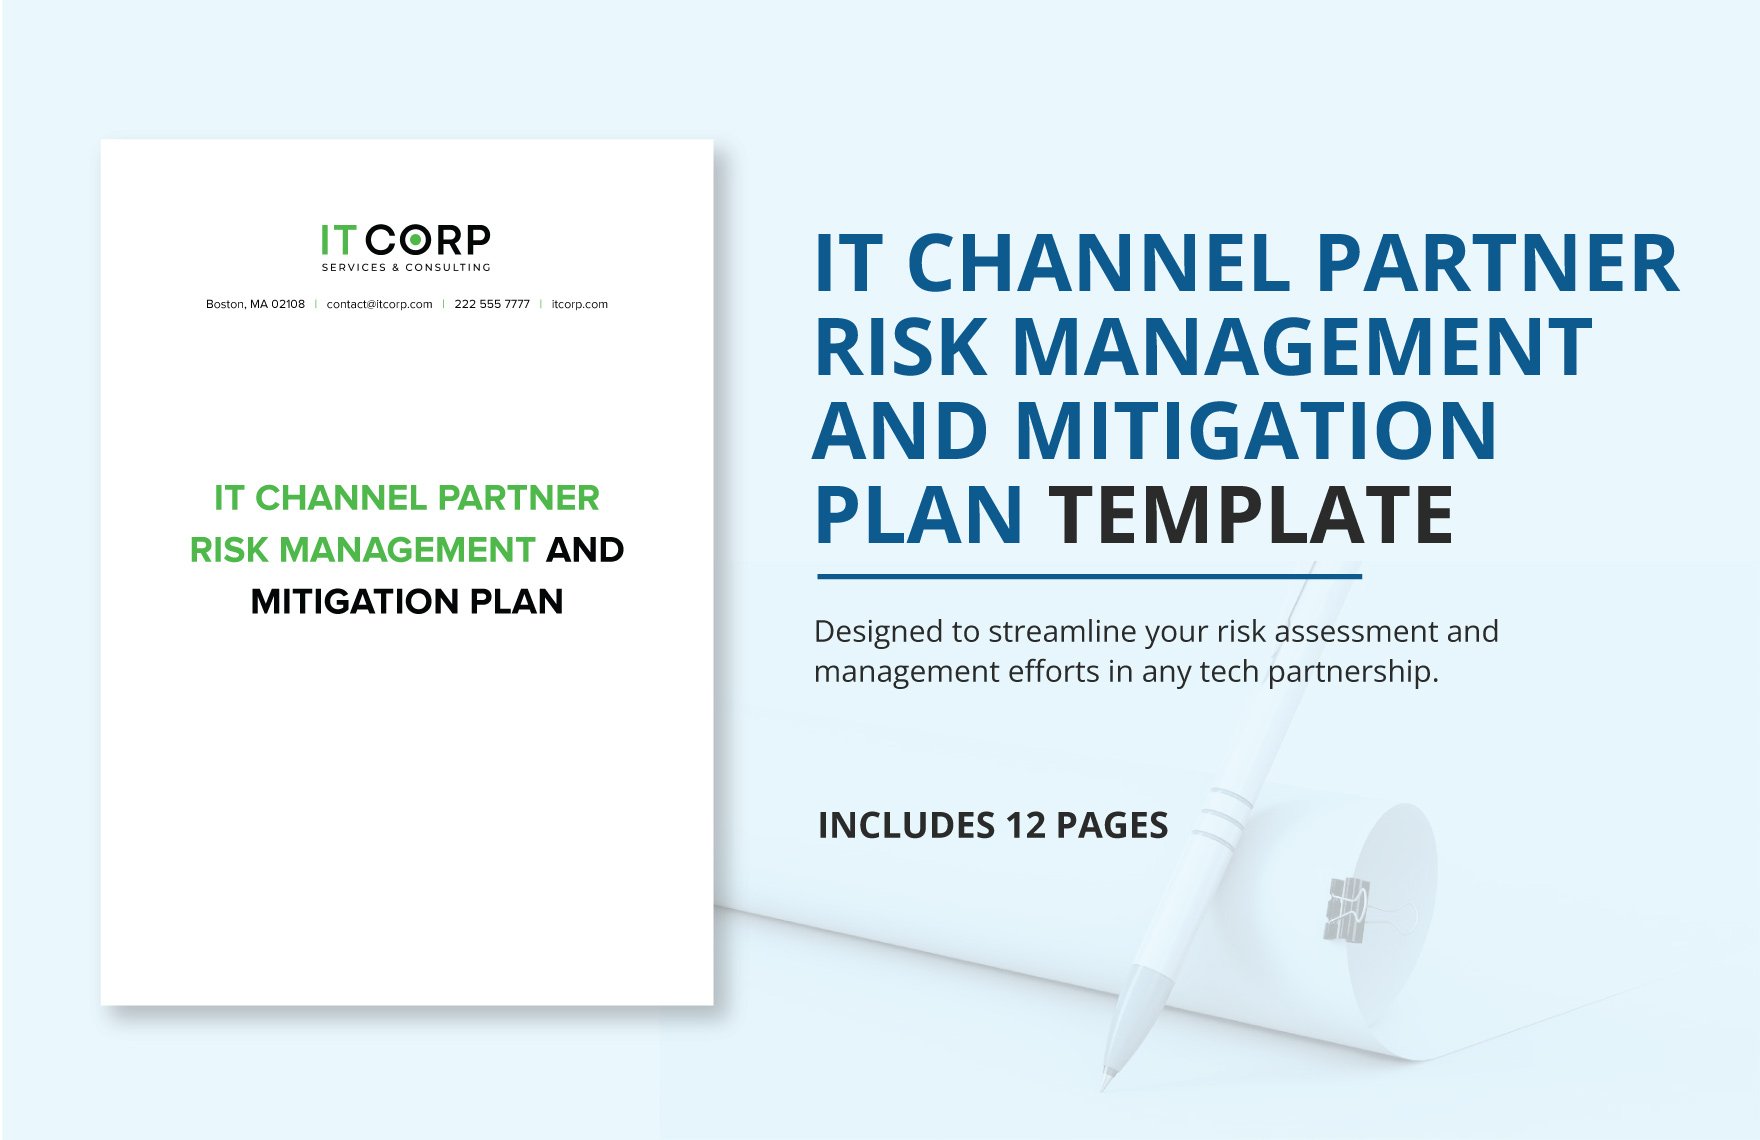 IT Channel Partner Risk Management and Mitigation Plan Template